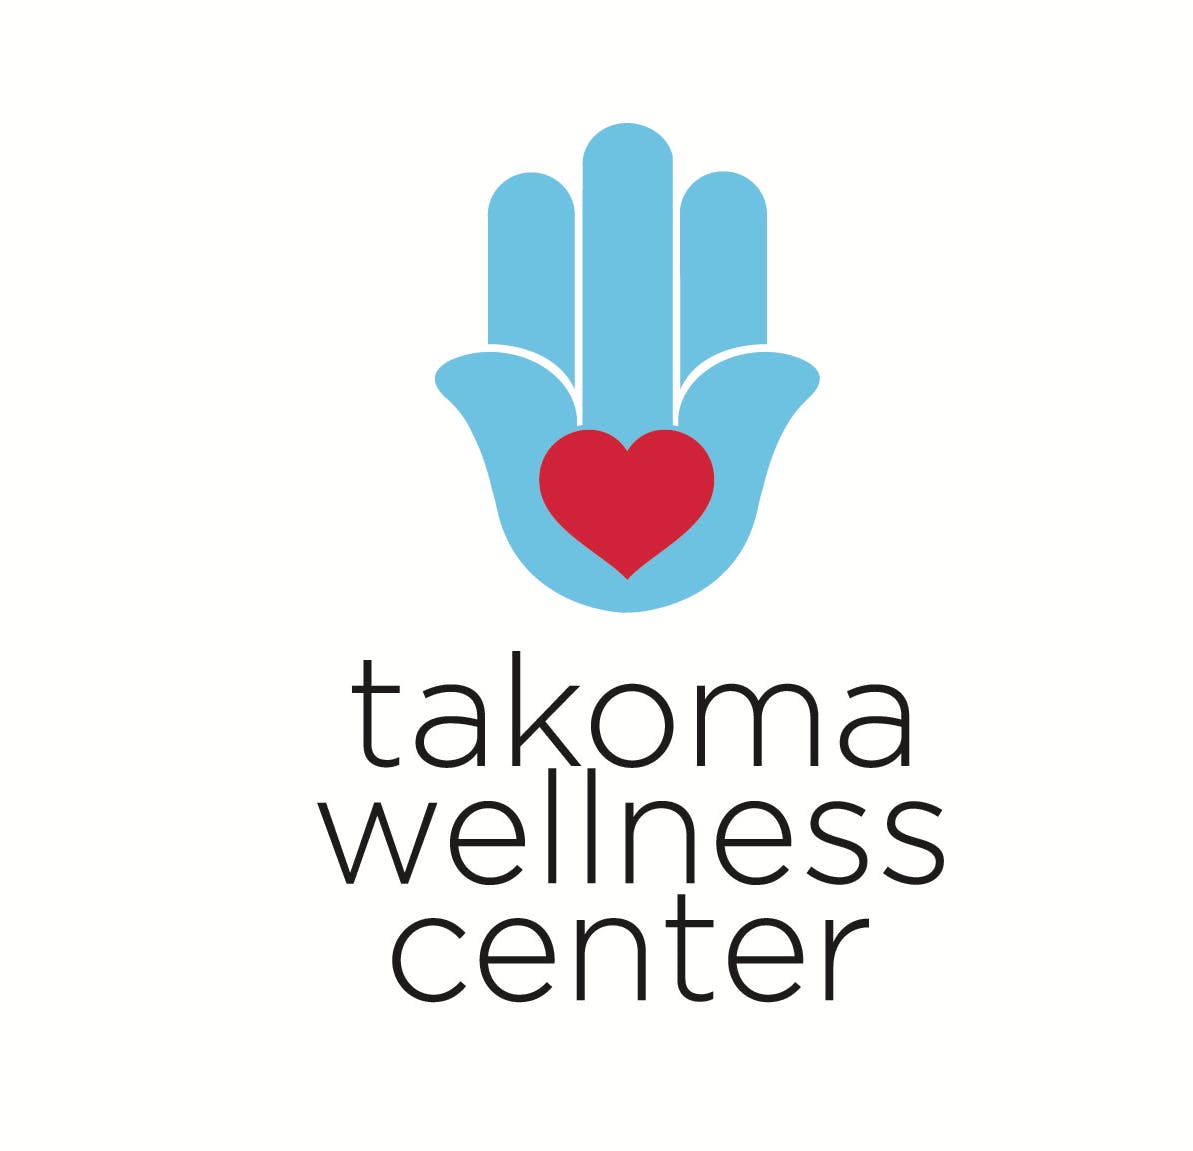 Takoma Wellness Center - Medical Marijuana Doctors - Cannabizme.com